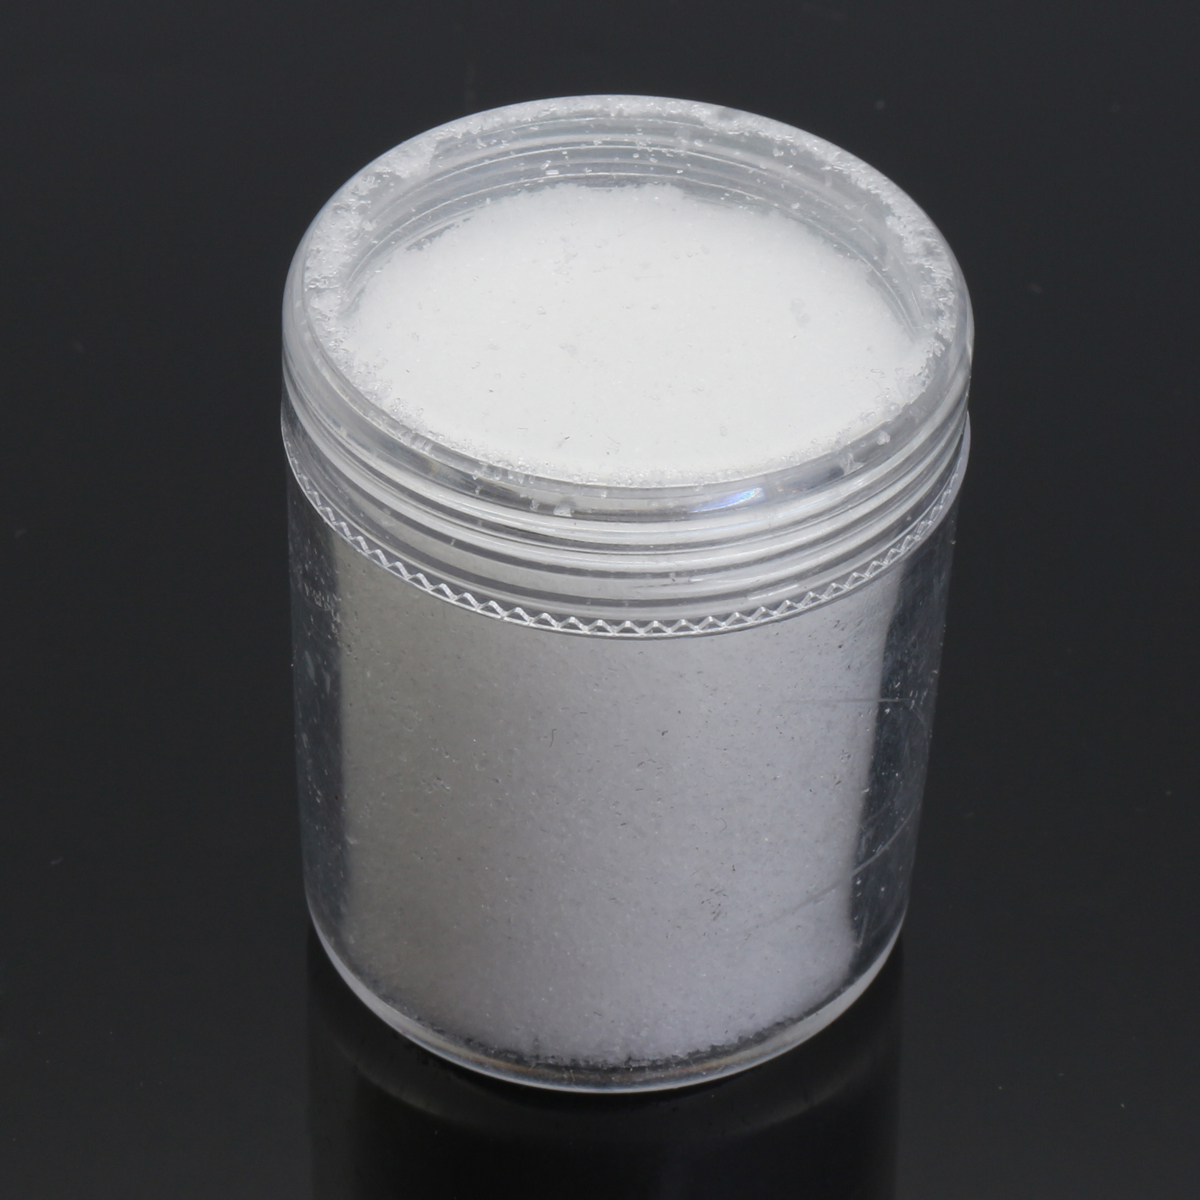 DIY-Slime-Kit-Snow-Mud-Clay-Plasticine-Styrofoam-Beads-Balls-White-Floam-Toy-Gift-1192180-4